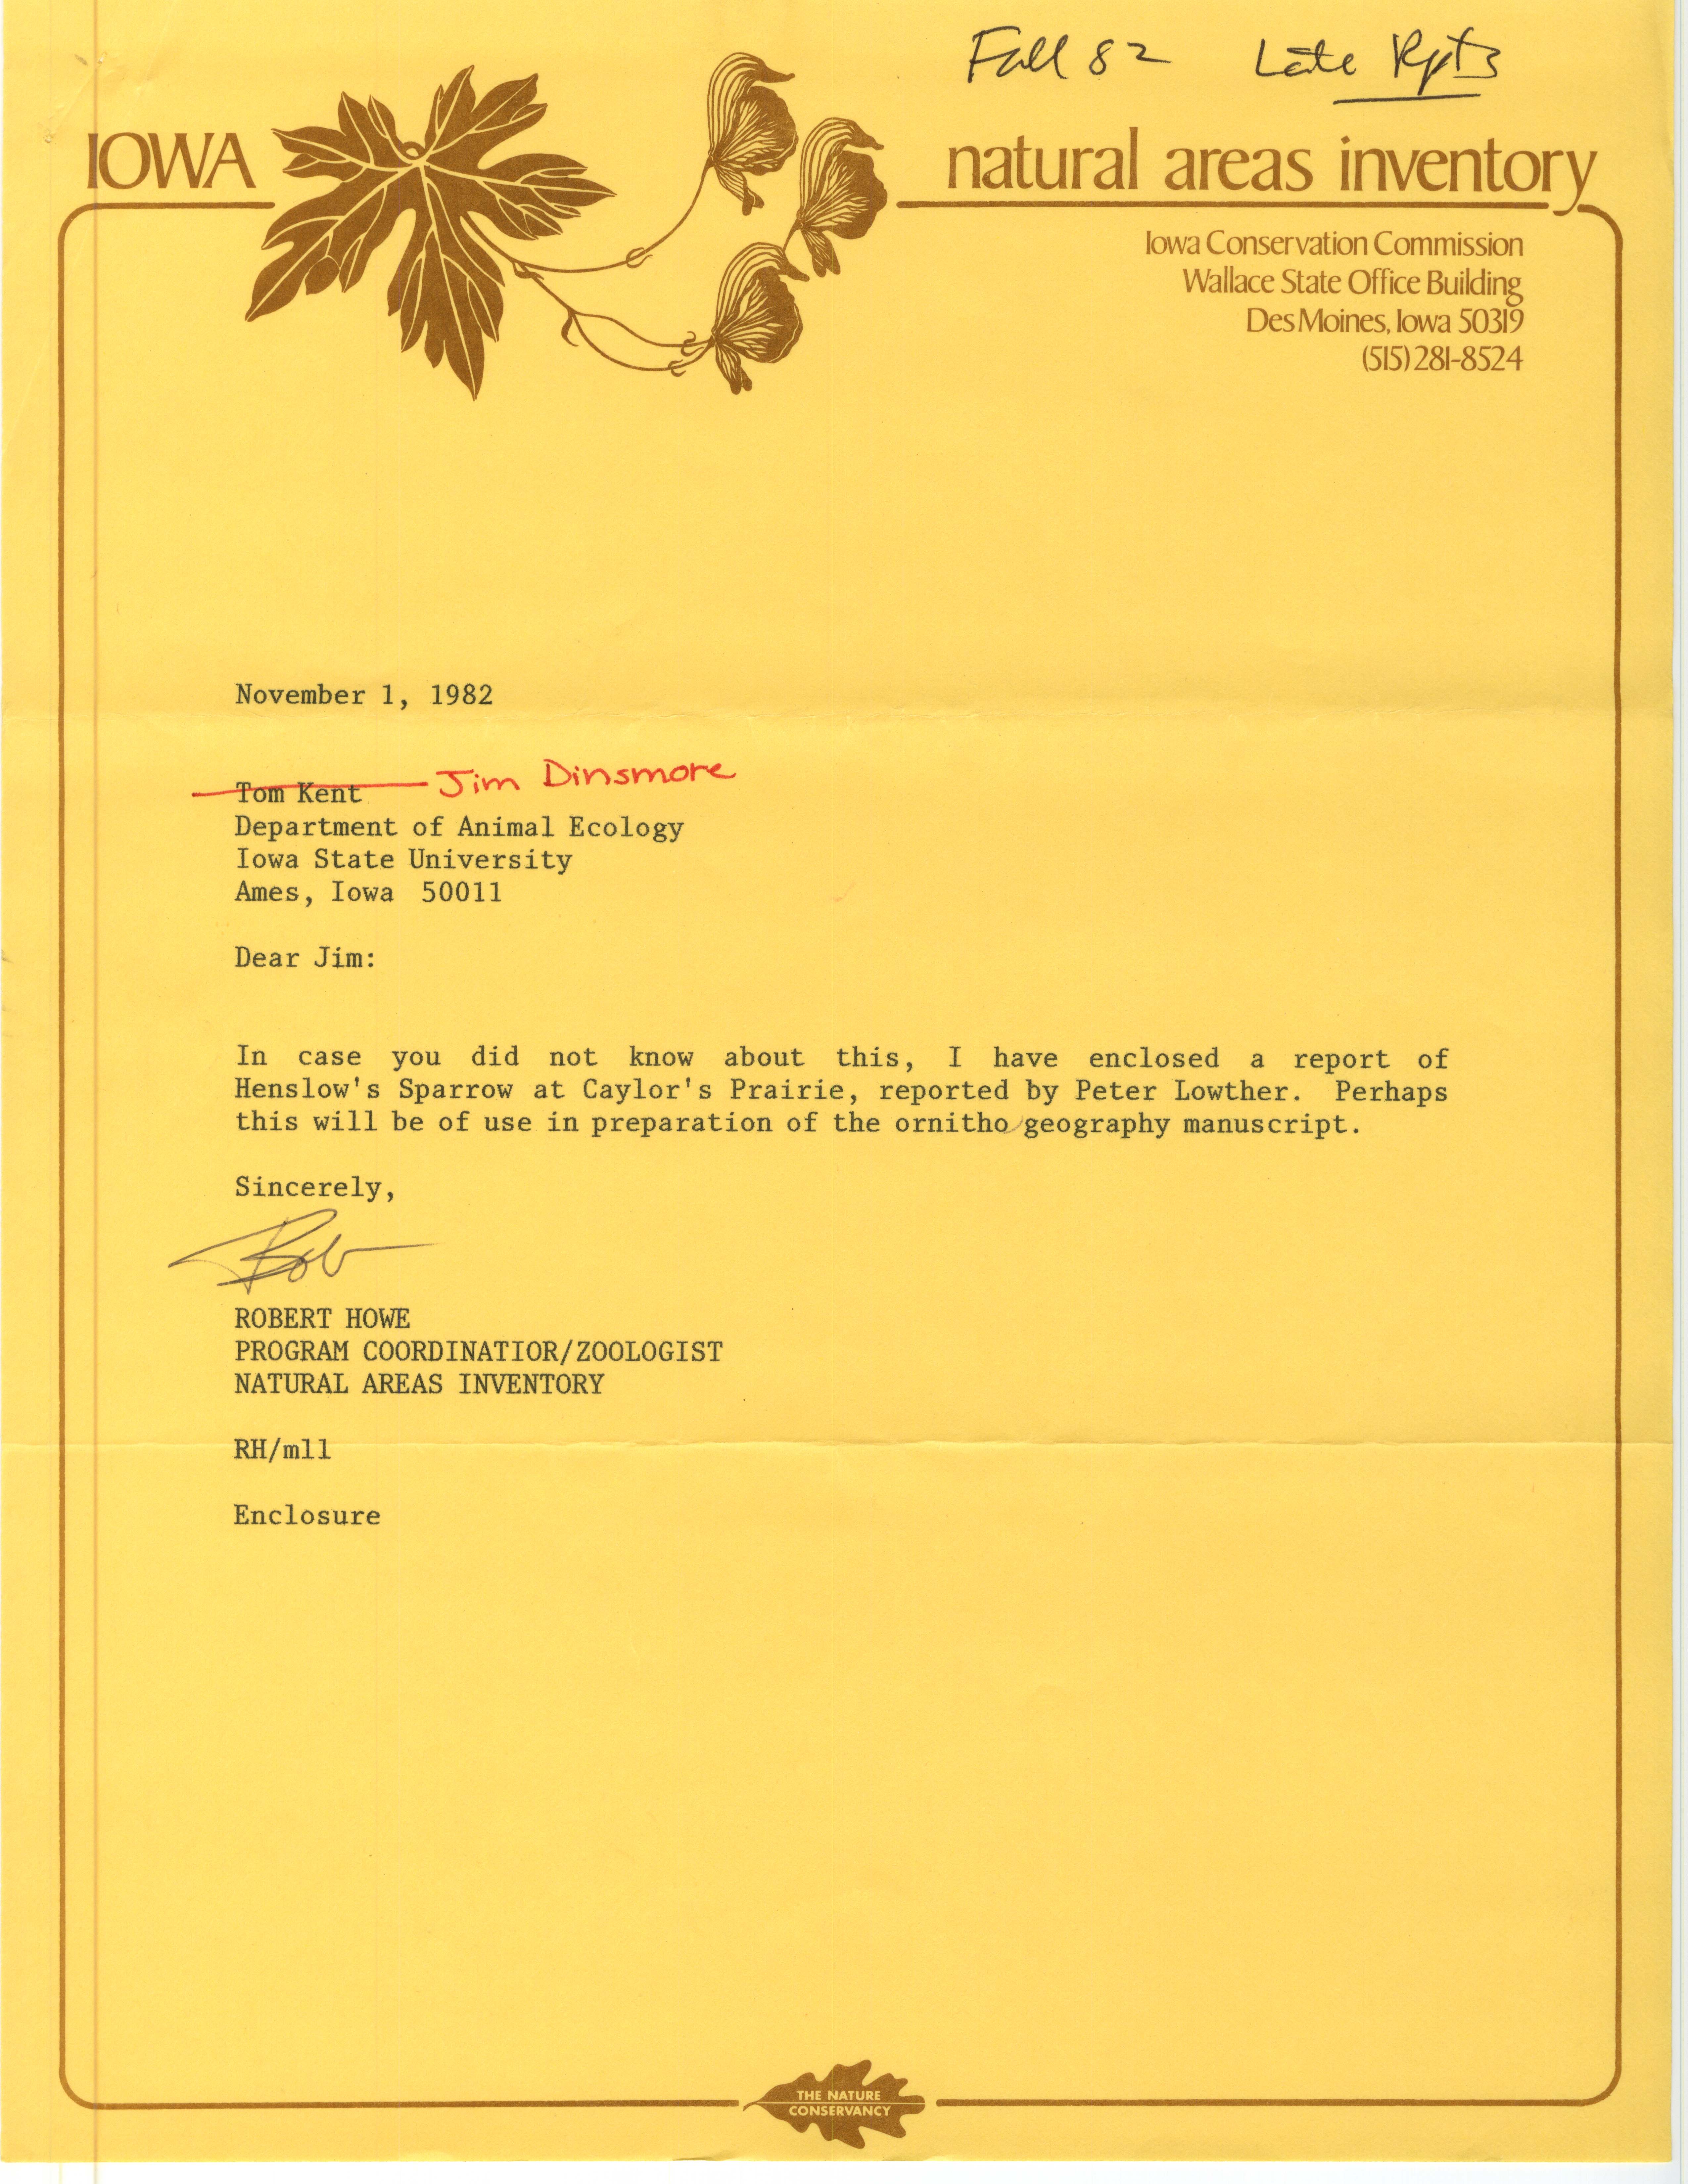 Robert W. Howe letter to James J. Dinsmore regarding a report of a Henslow's Sparrow, November 1, 1982